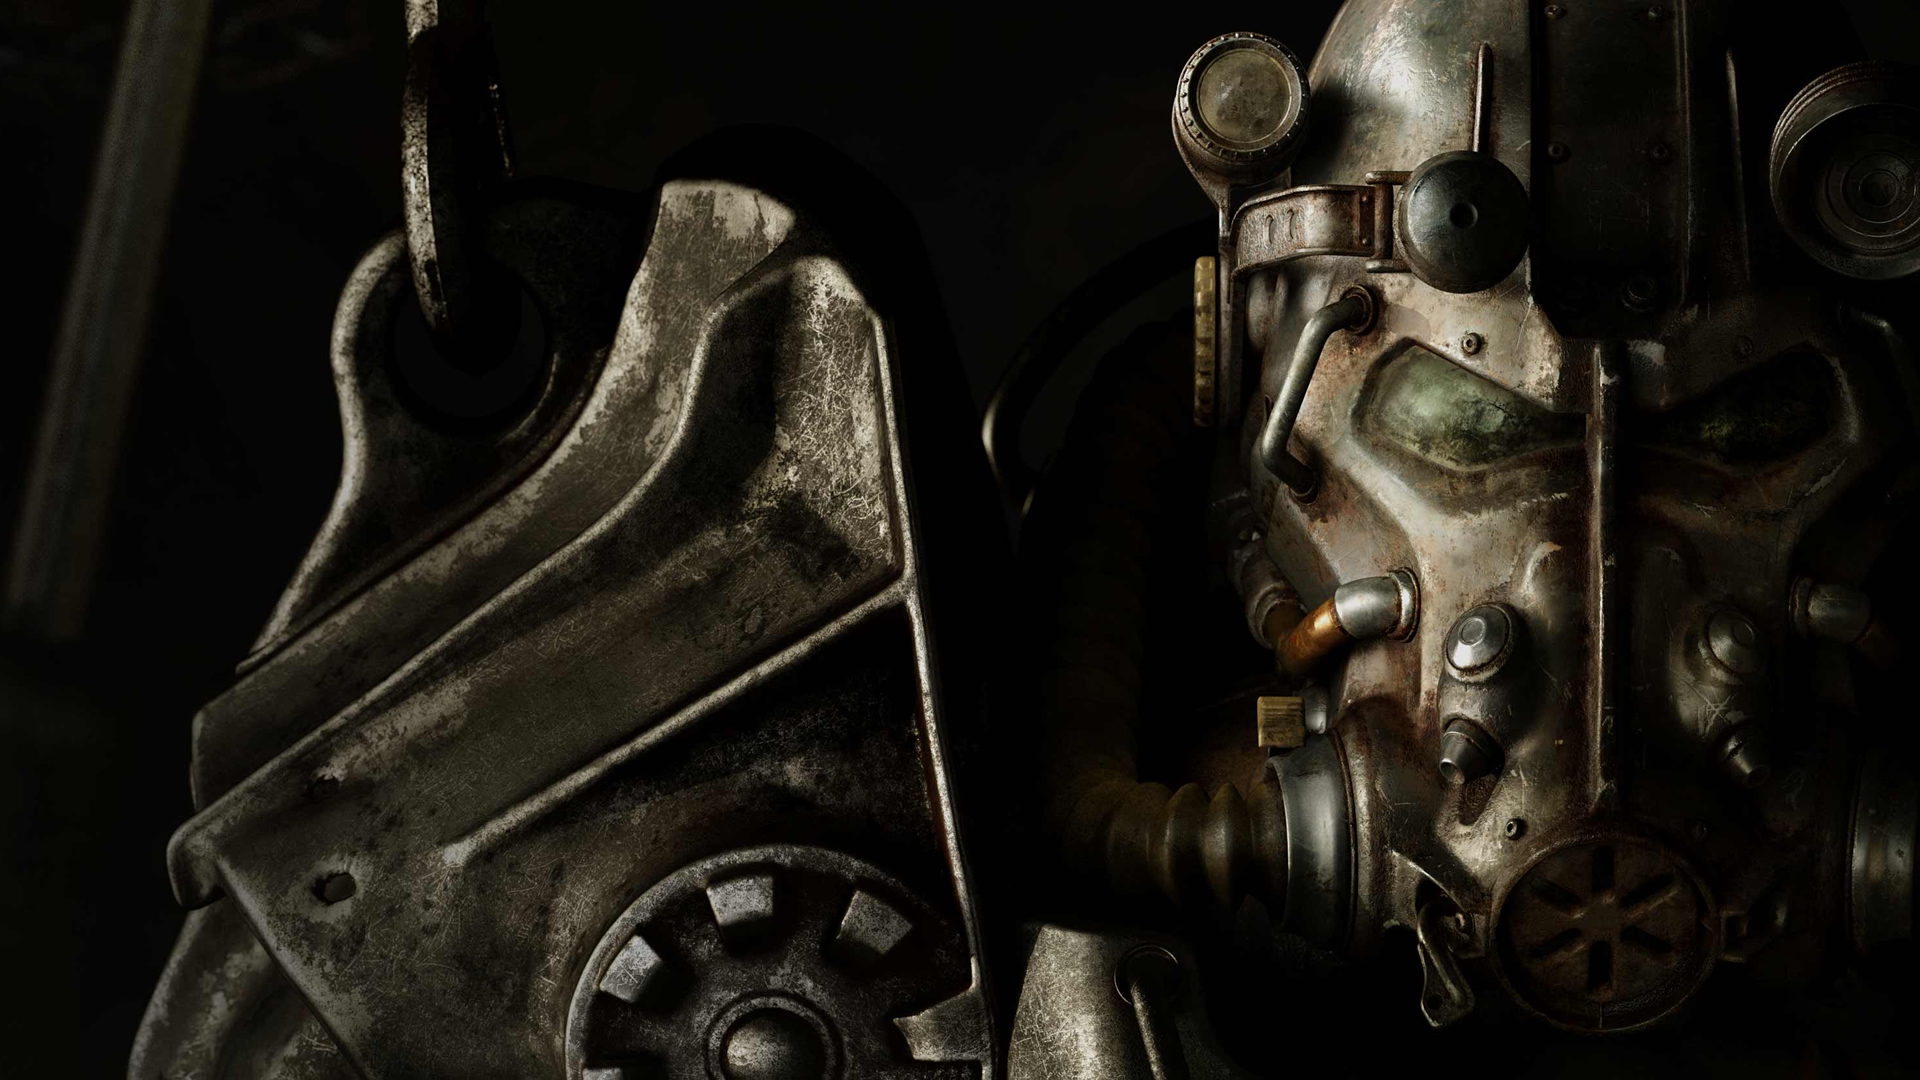 Fallout 4 壁紙集 Wallpapers Fallout 4 フォールアウト4 攻略情報 ファンサイト